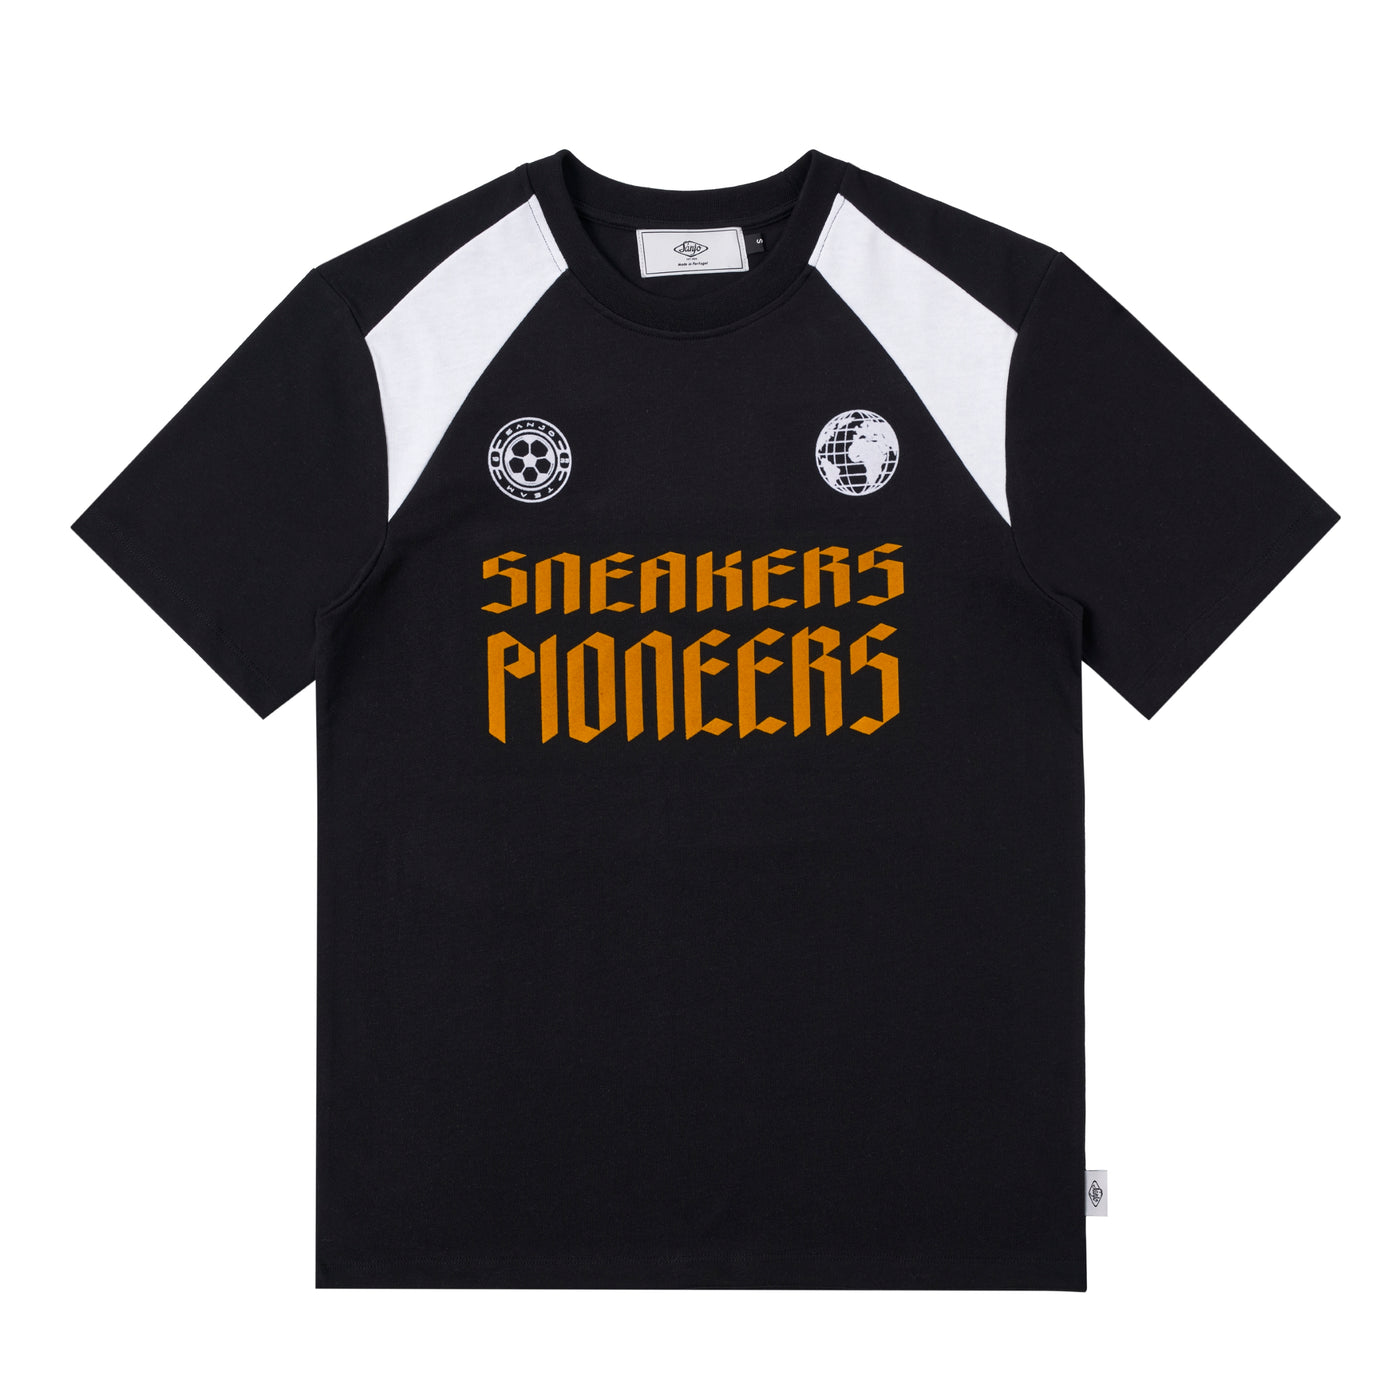 Sanjo Sneakers Pioners T-shirt // Black